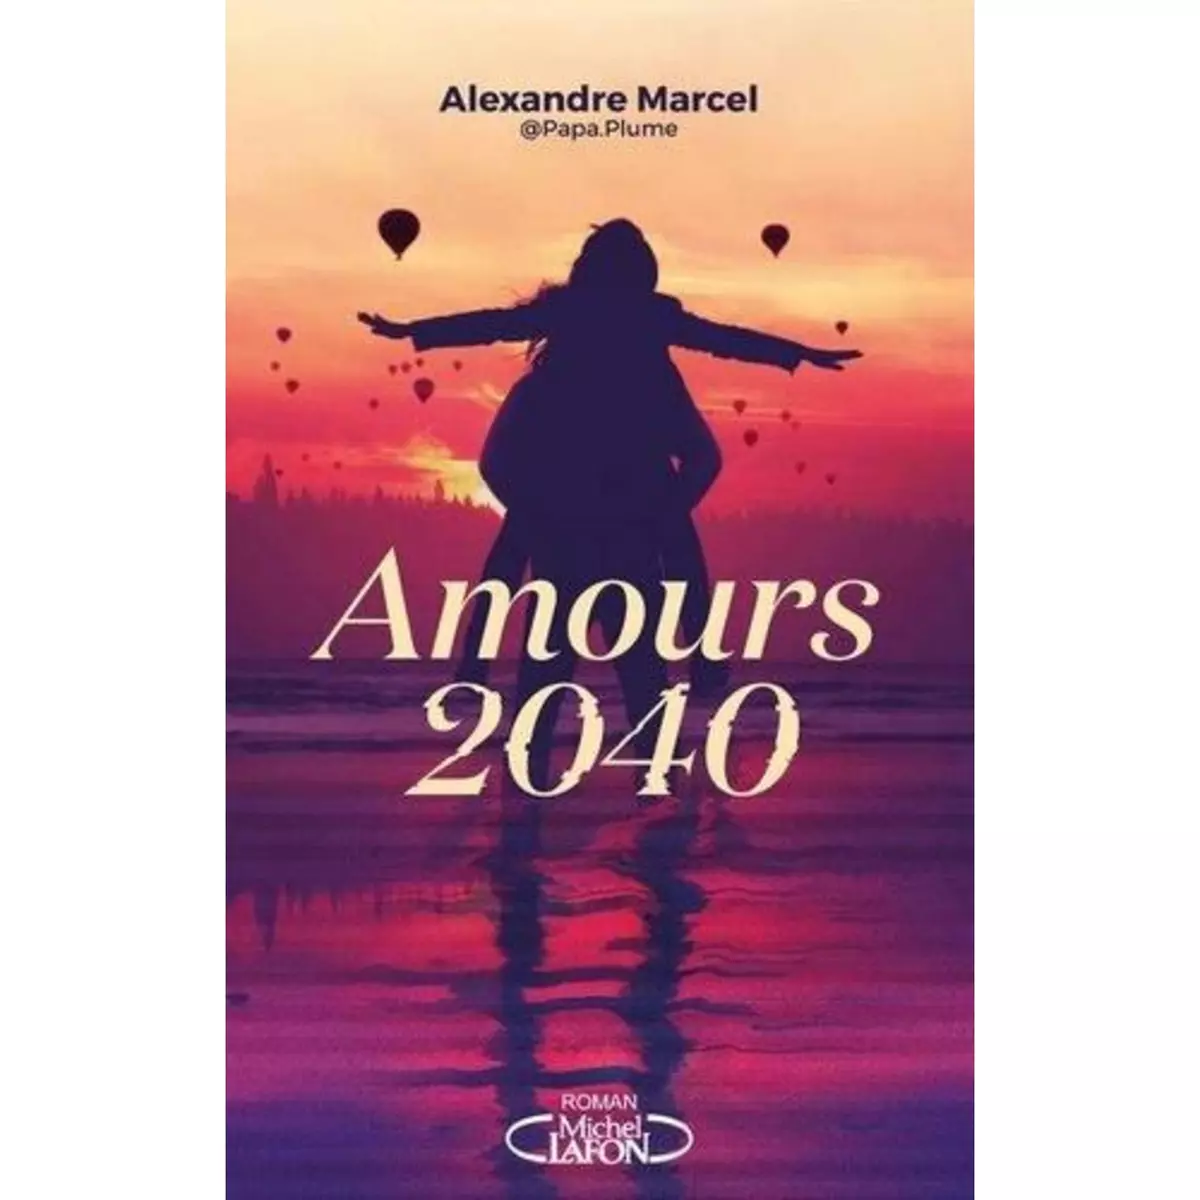  AMOURS 2040, Marcel Alexandre